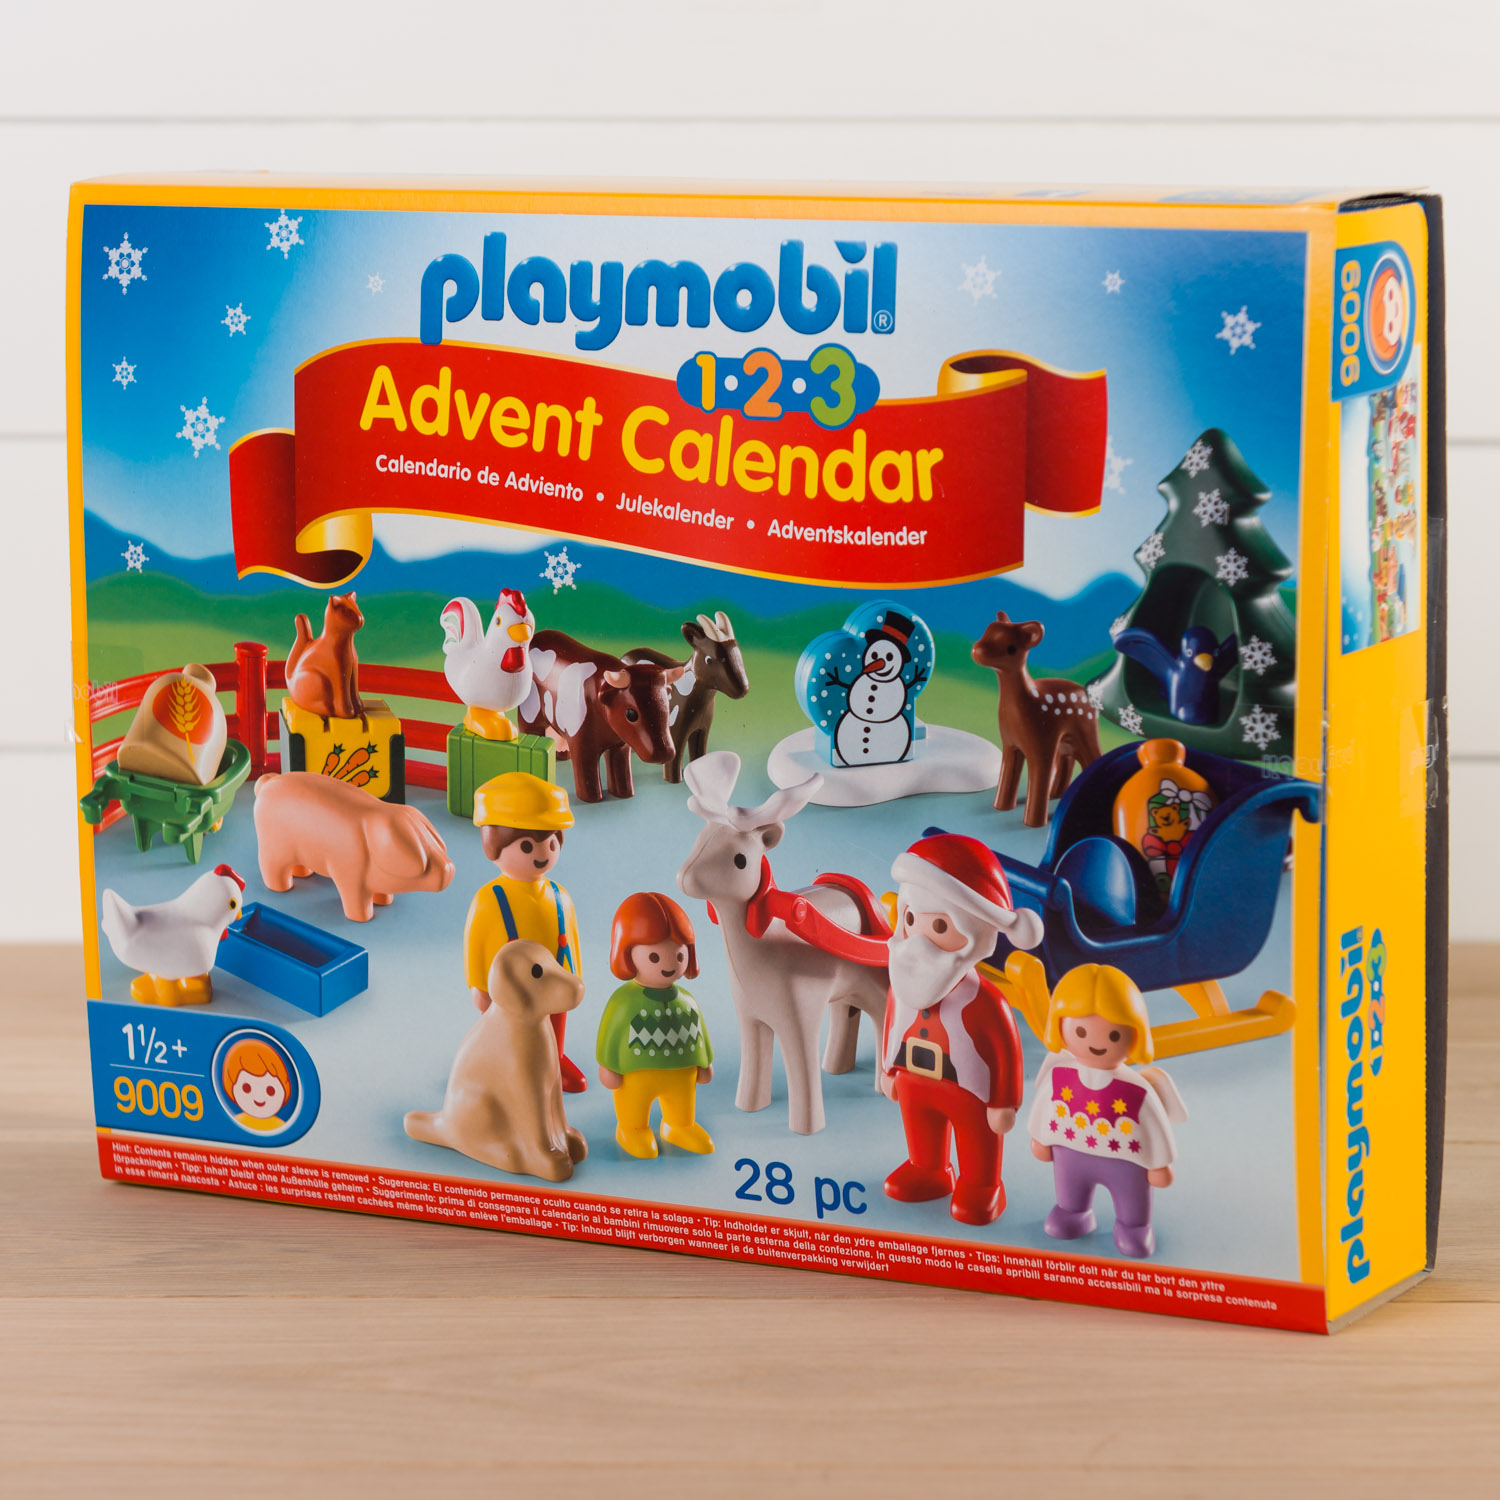 Playmobil Advent Calendar Cracker Barrel